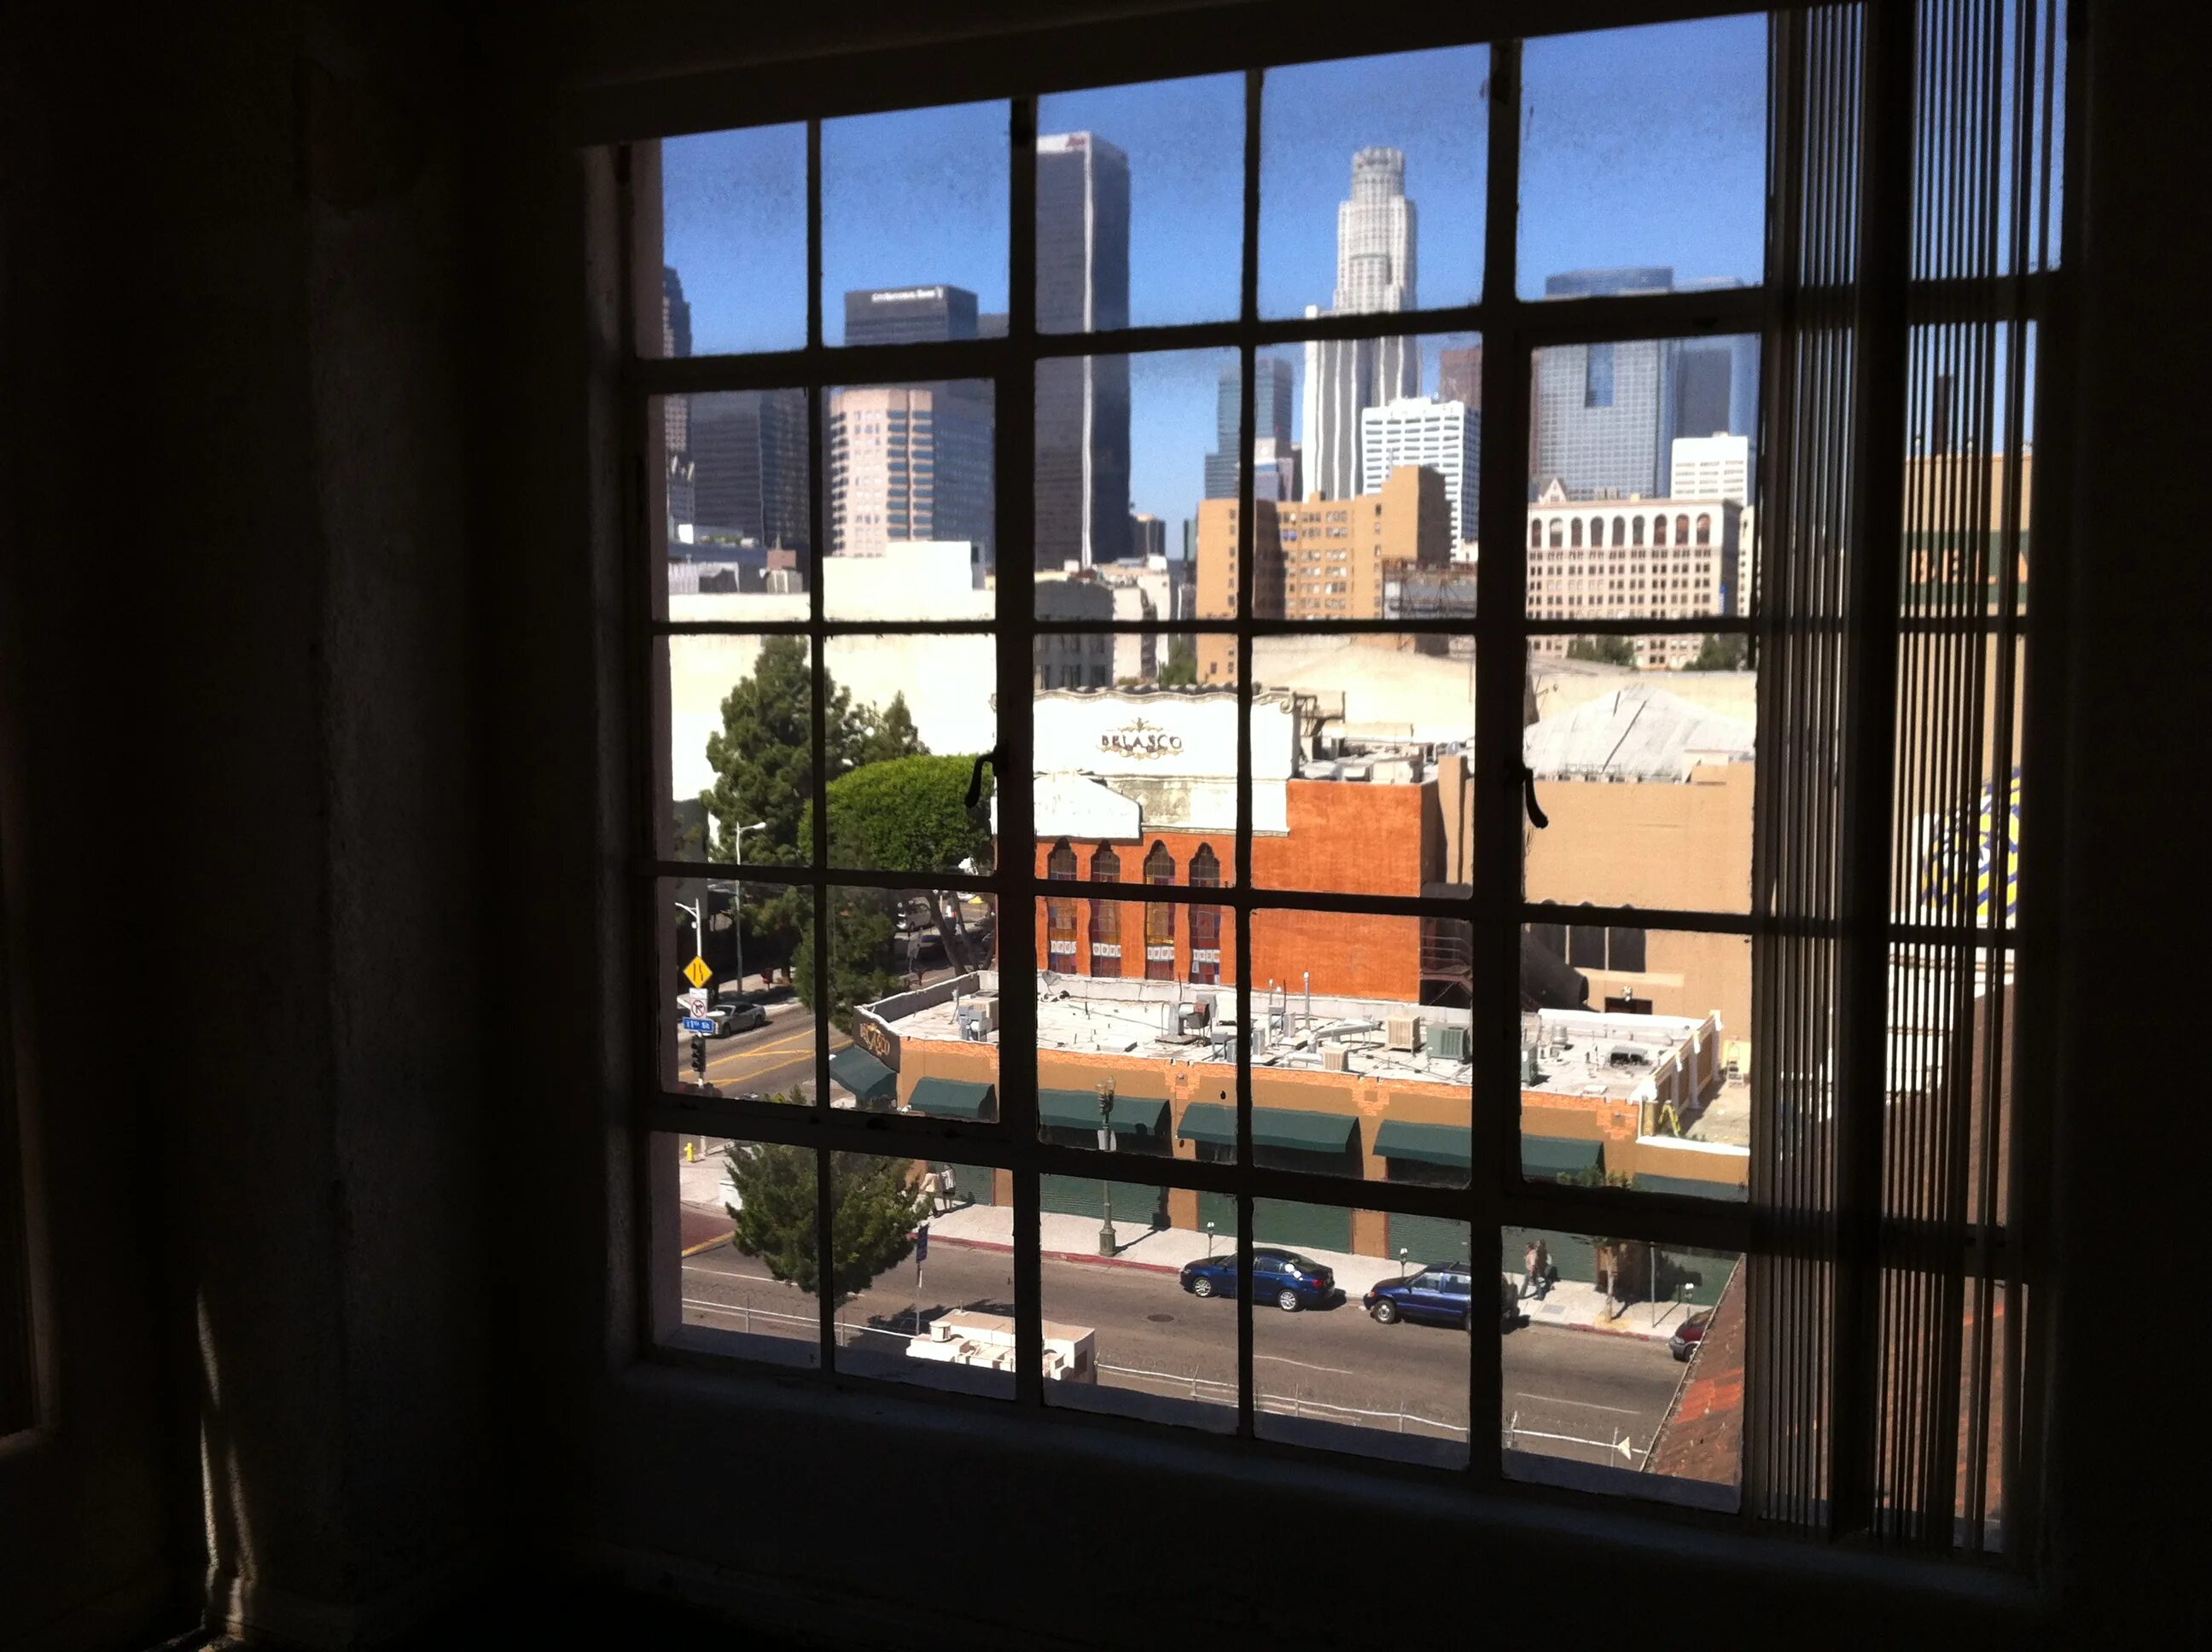 City Window. Apartment Window. Building through Window. Home Window in City.